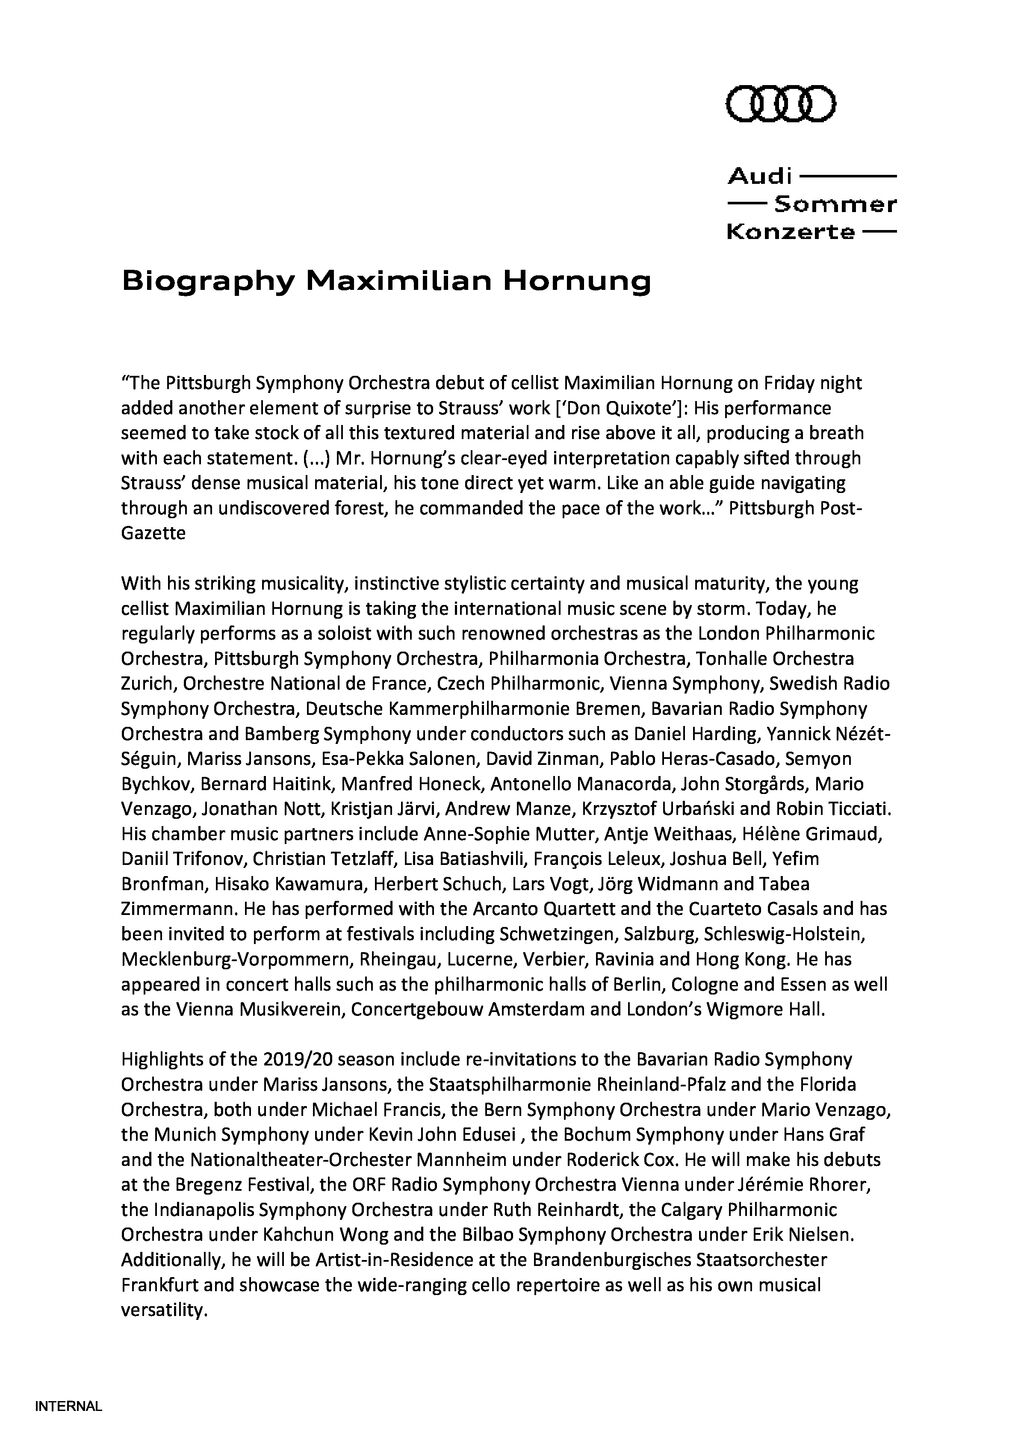 Biography Maximilian Hornung